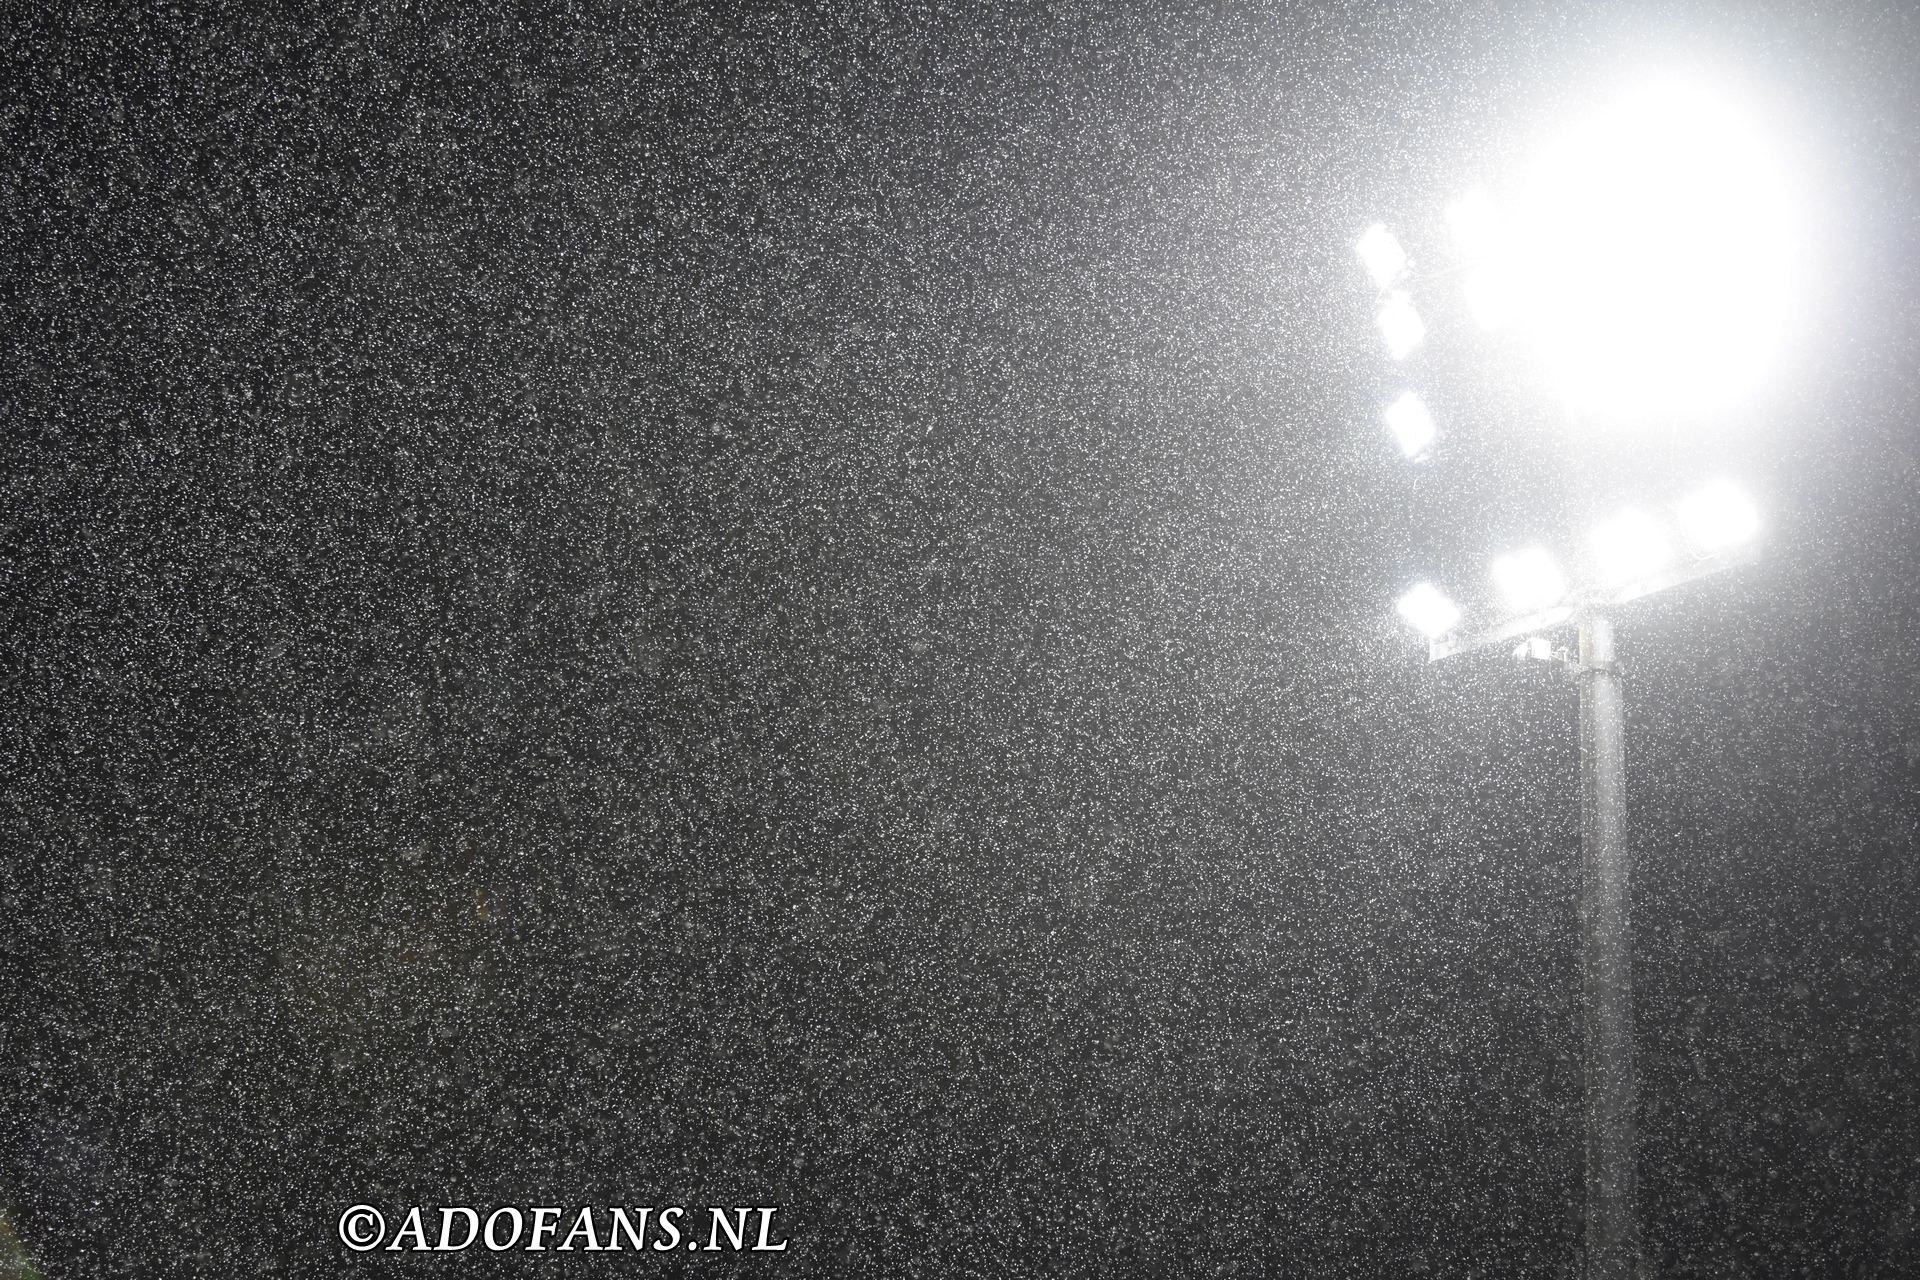 FC Dordrecht ADO Den Haag Keukenkampioen Divisie